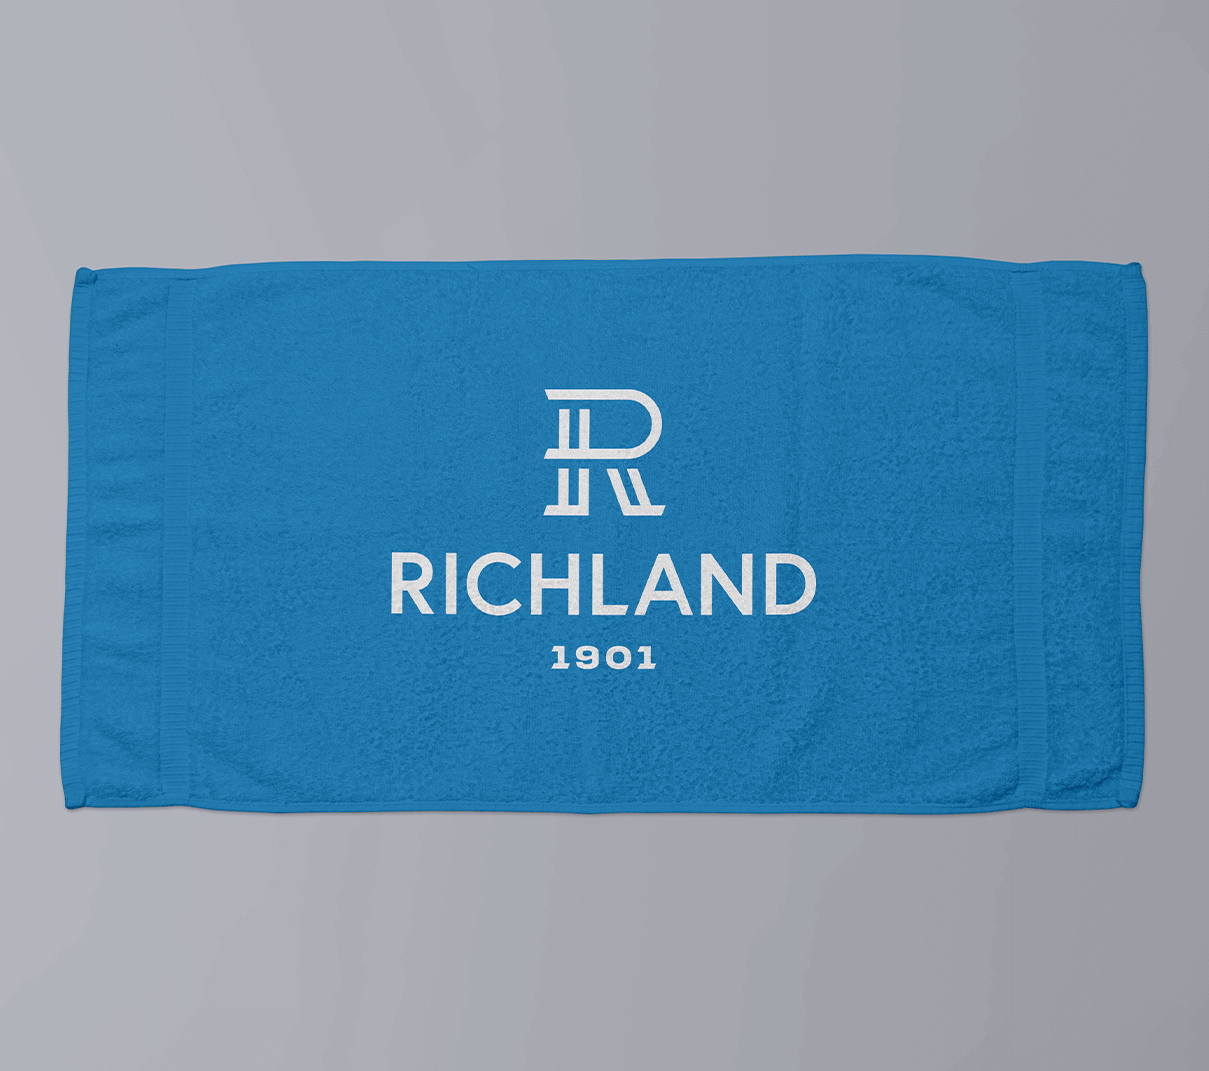 Richland Country Club main logo on blue golf towel